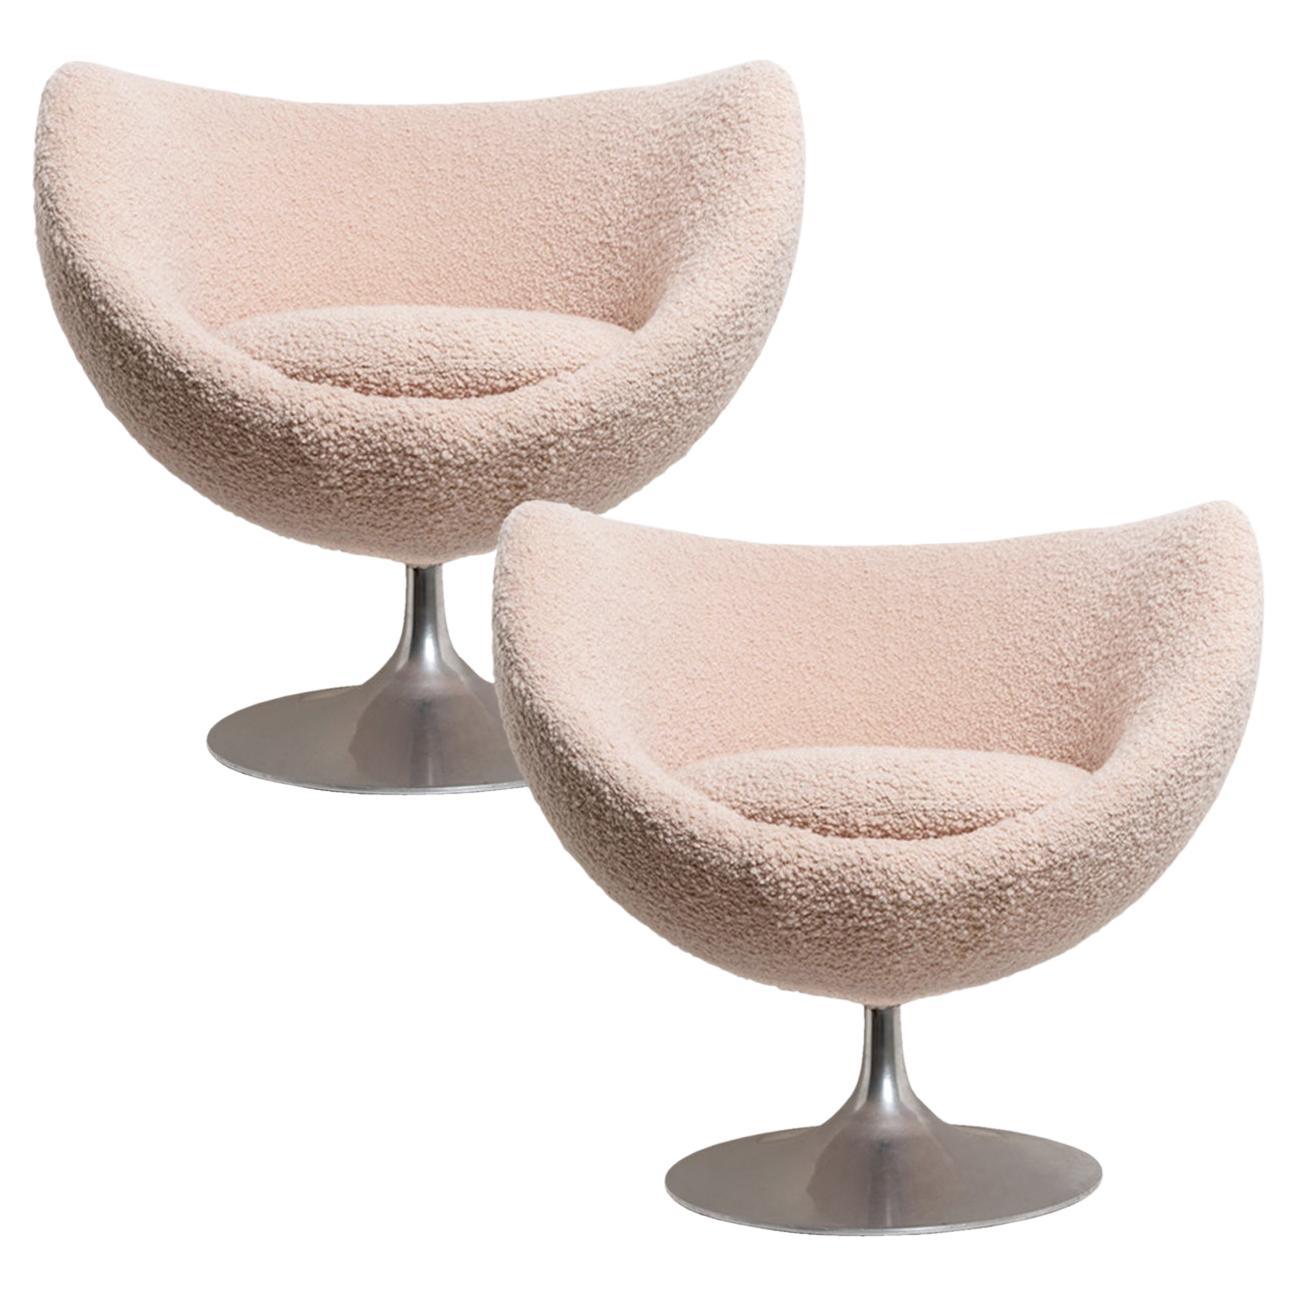 Meurop Crocus Ball Chair, New Upholstered with High-End Fabric by Dedar, Italy